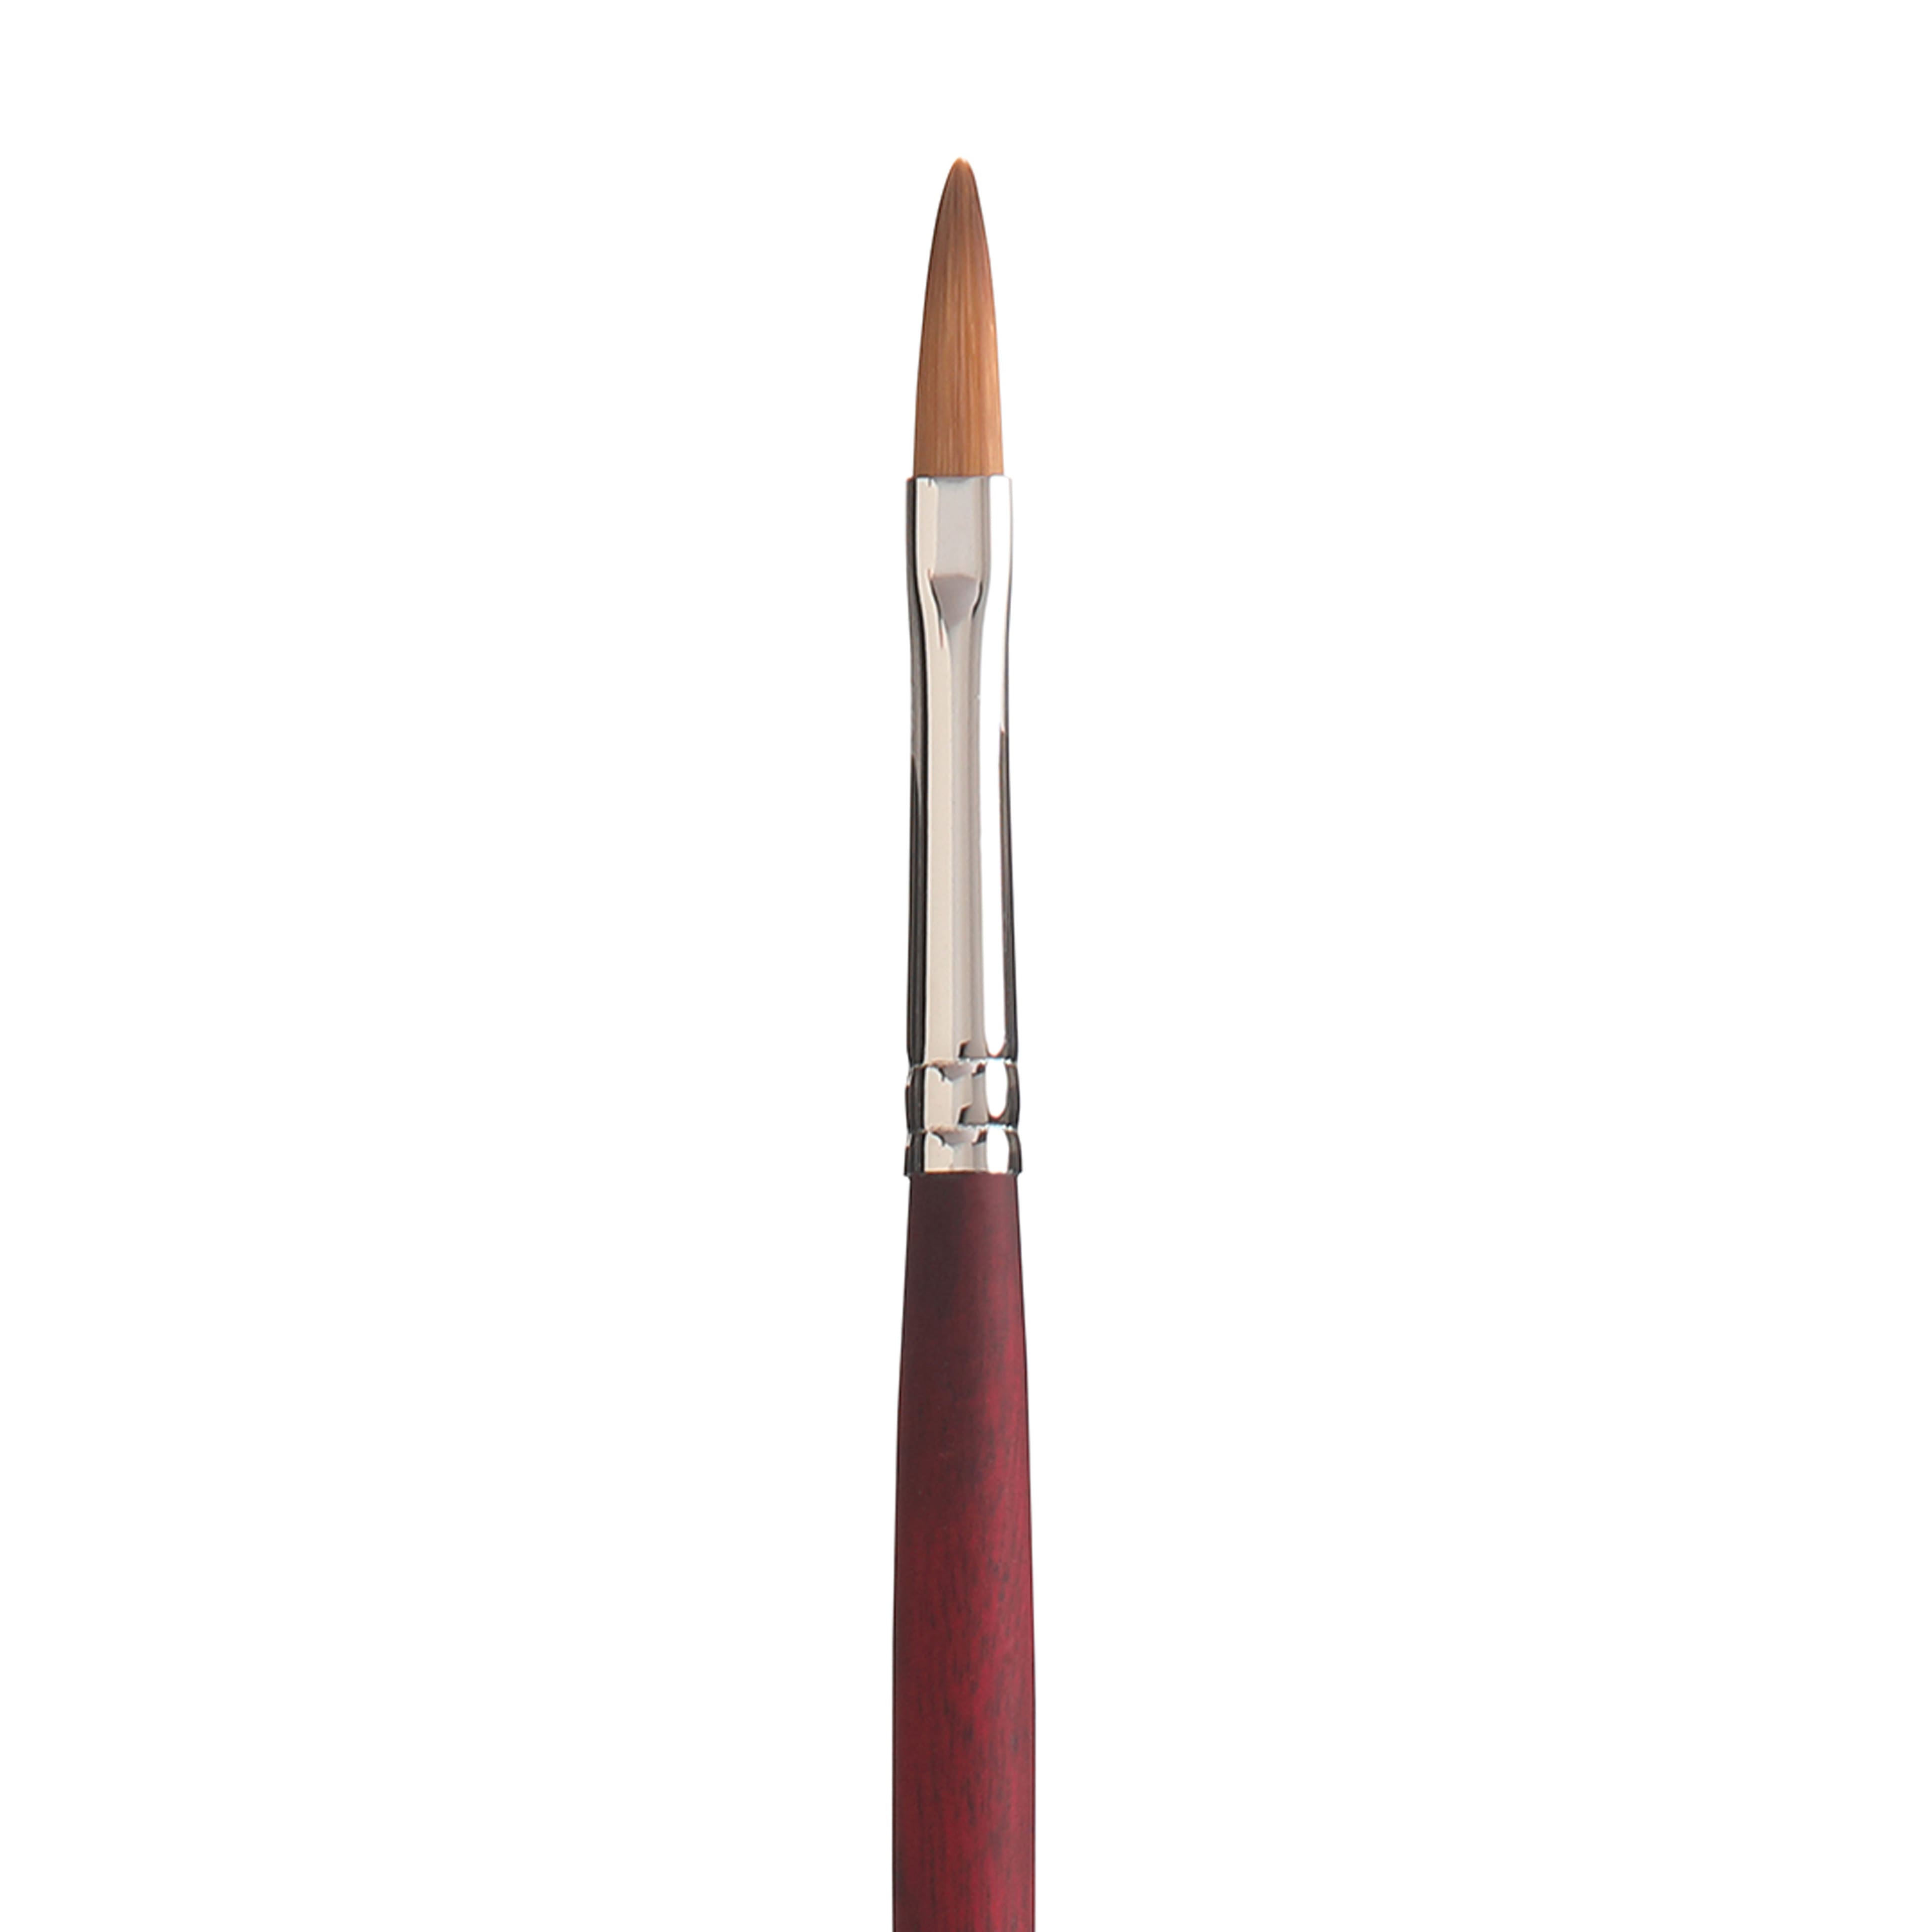 Princeton&#x2122; Velvetouch&#x2122; Series 3900 Long Handle Filbert Brush